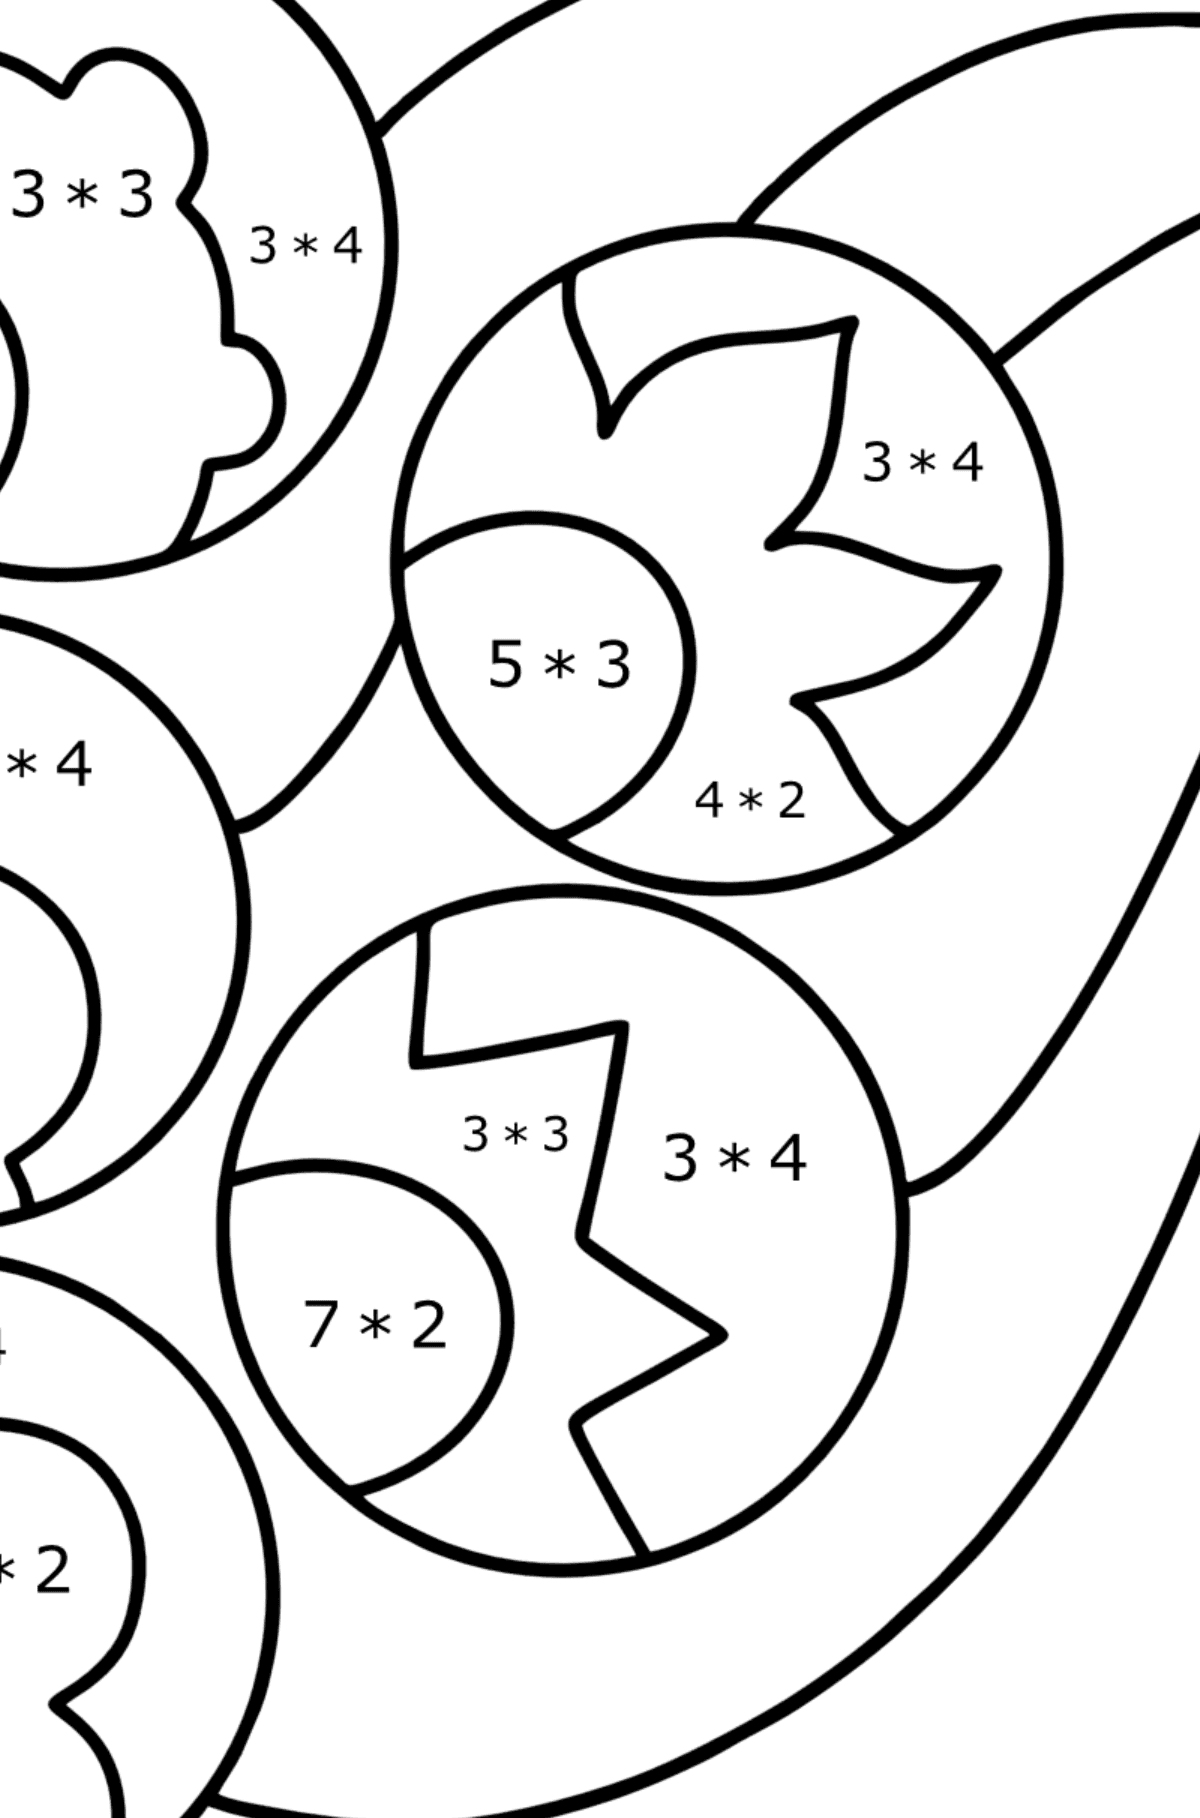 Ausmalbild Zentangle inspiriert - Mathe Ausmalbilder - Multiplikation für Kinder